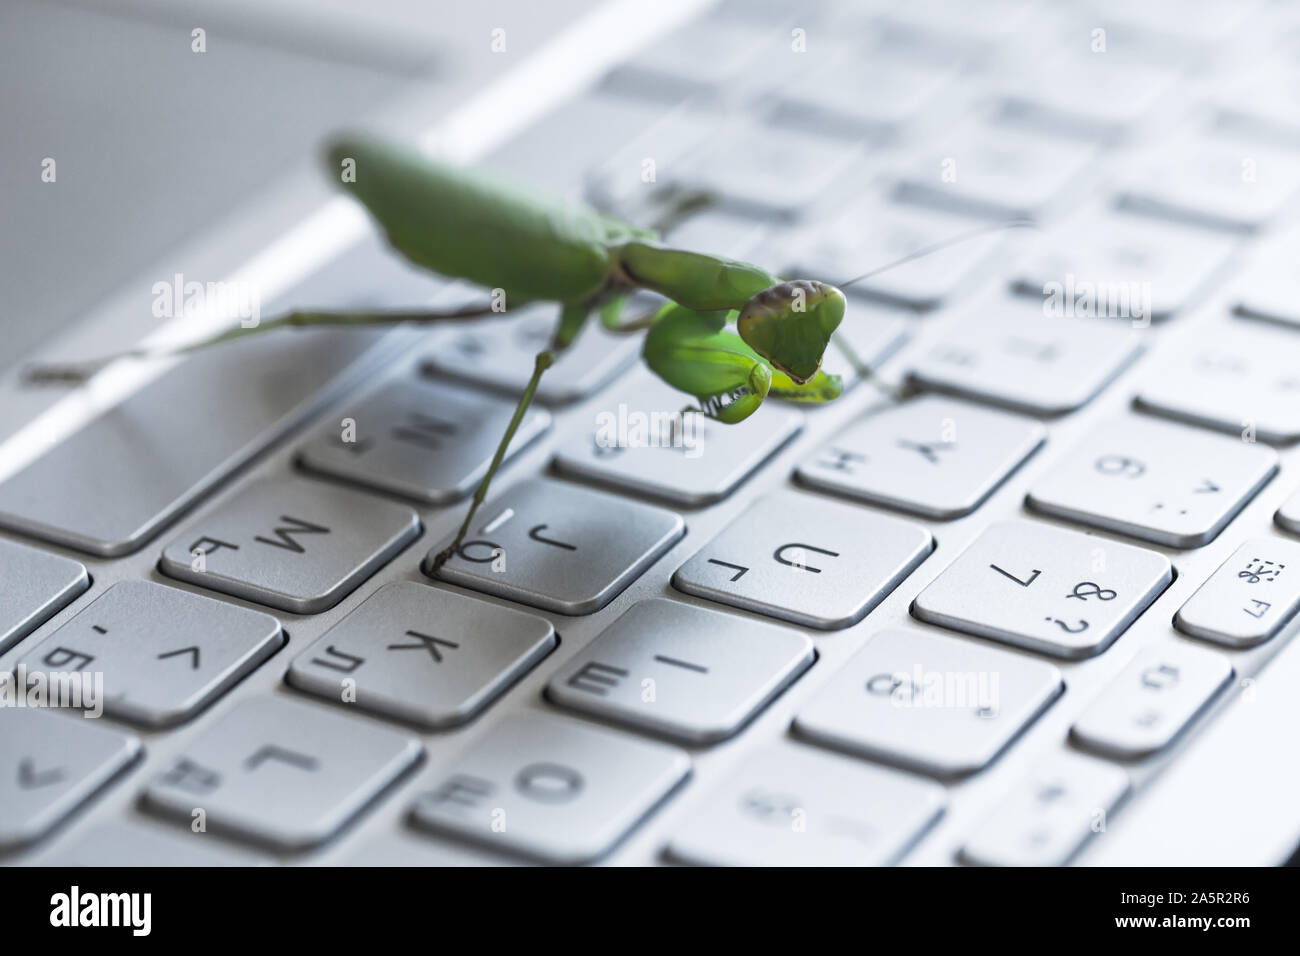 Computer bug metaphor, green mantis walks on shiny metallic laptop keyboard with English and Russian letters Stock Photo